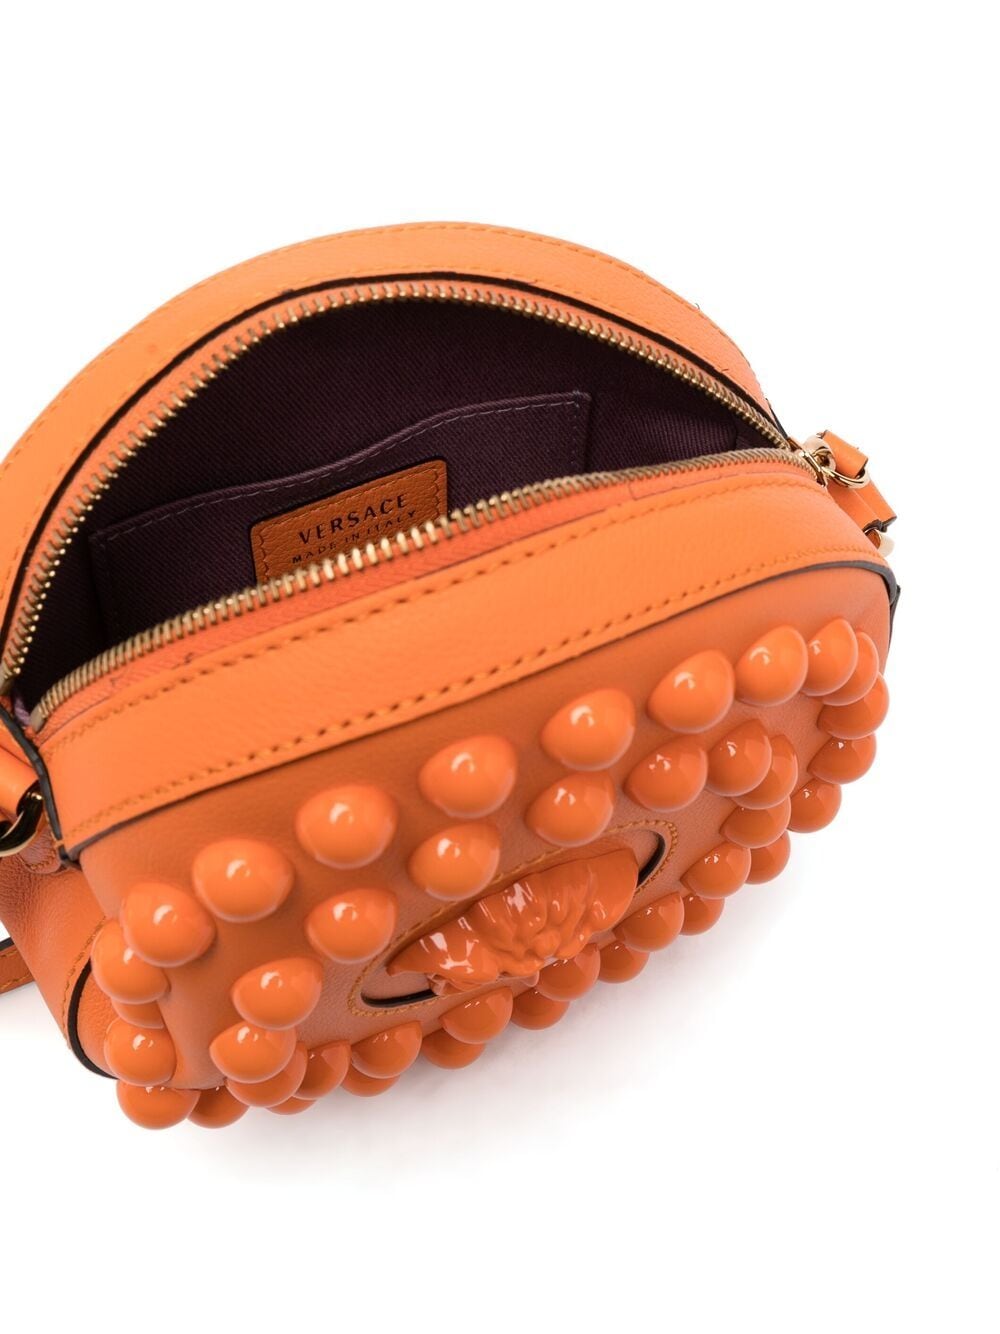 фото Versace сумка через плечо la medusa